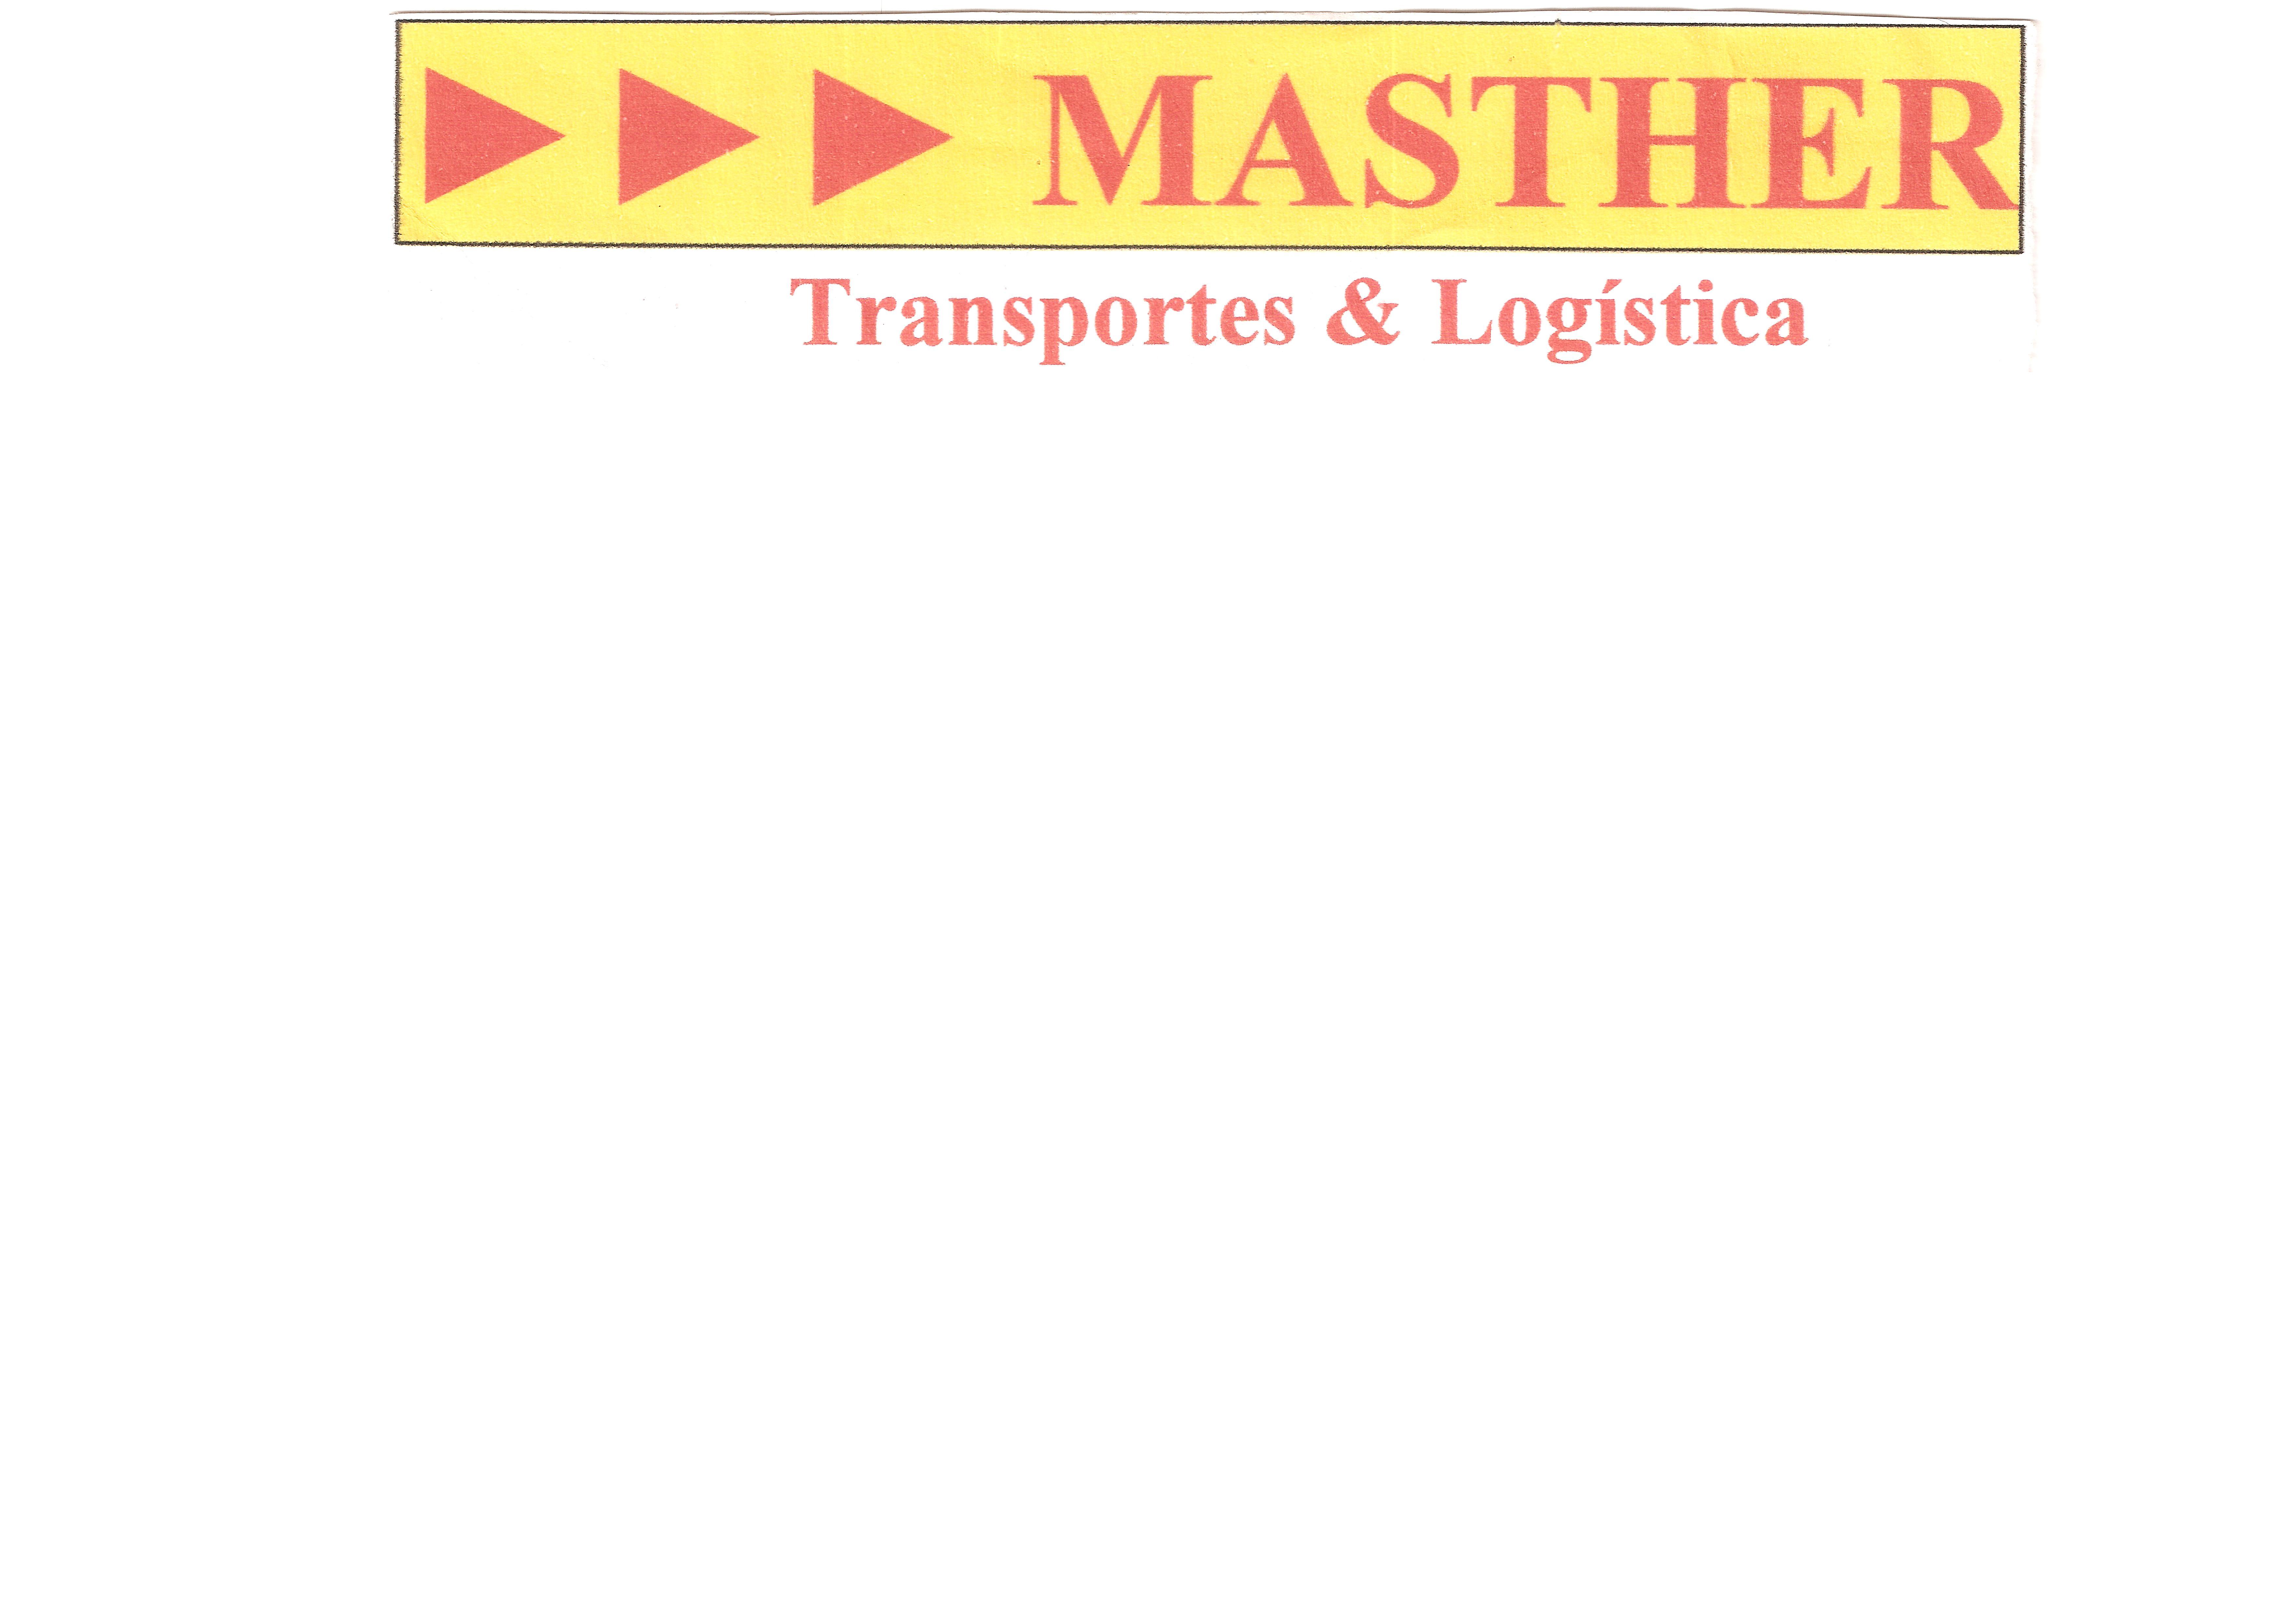 Masther Transportes & Logística logo